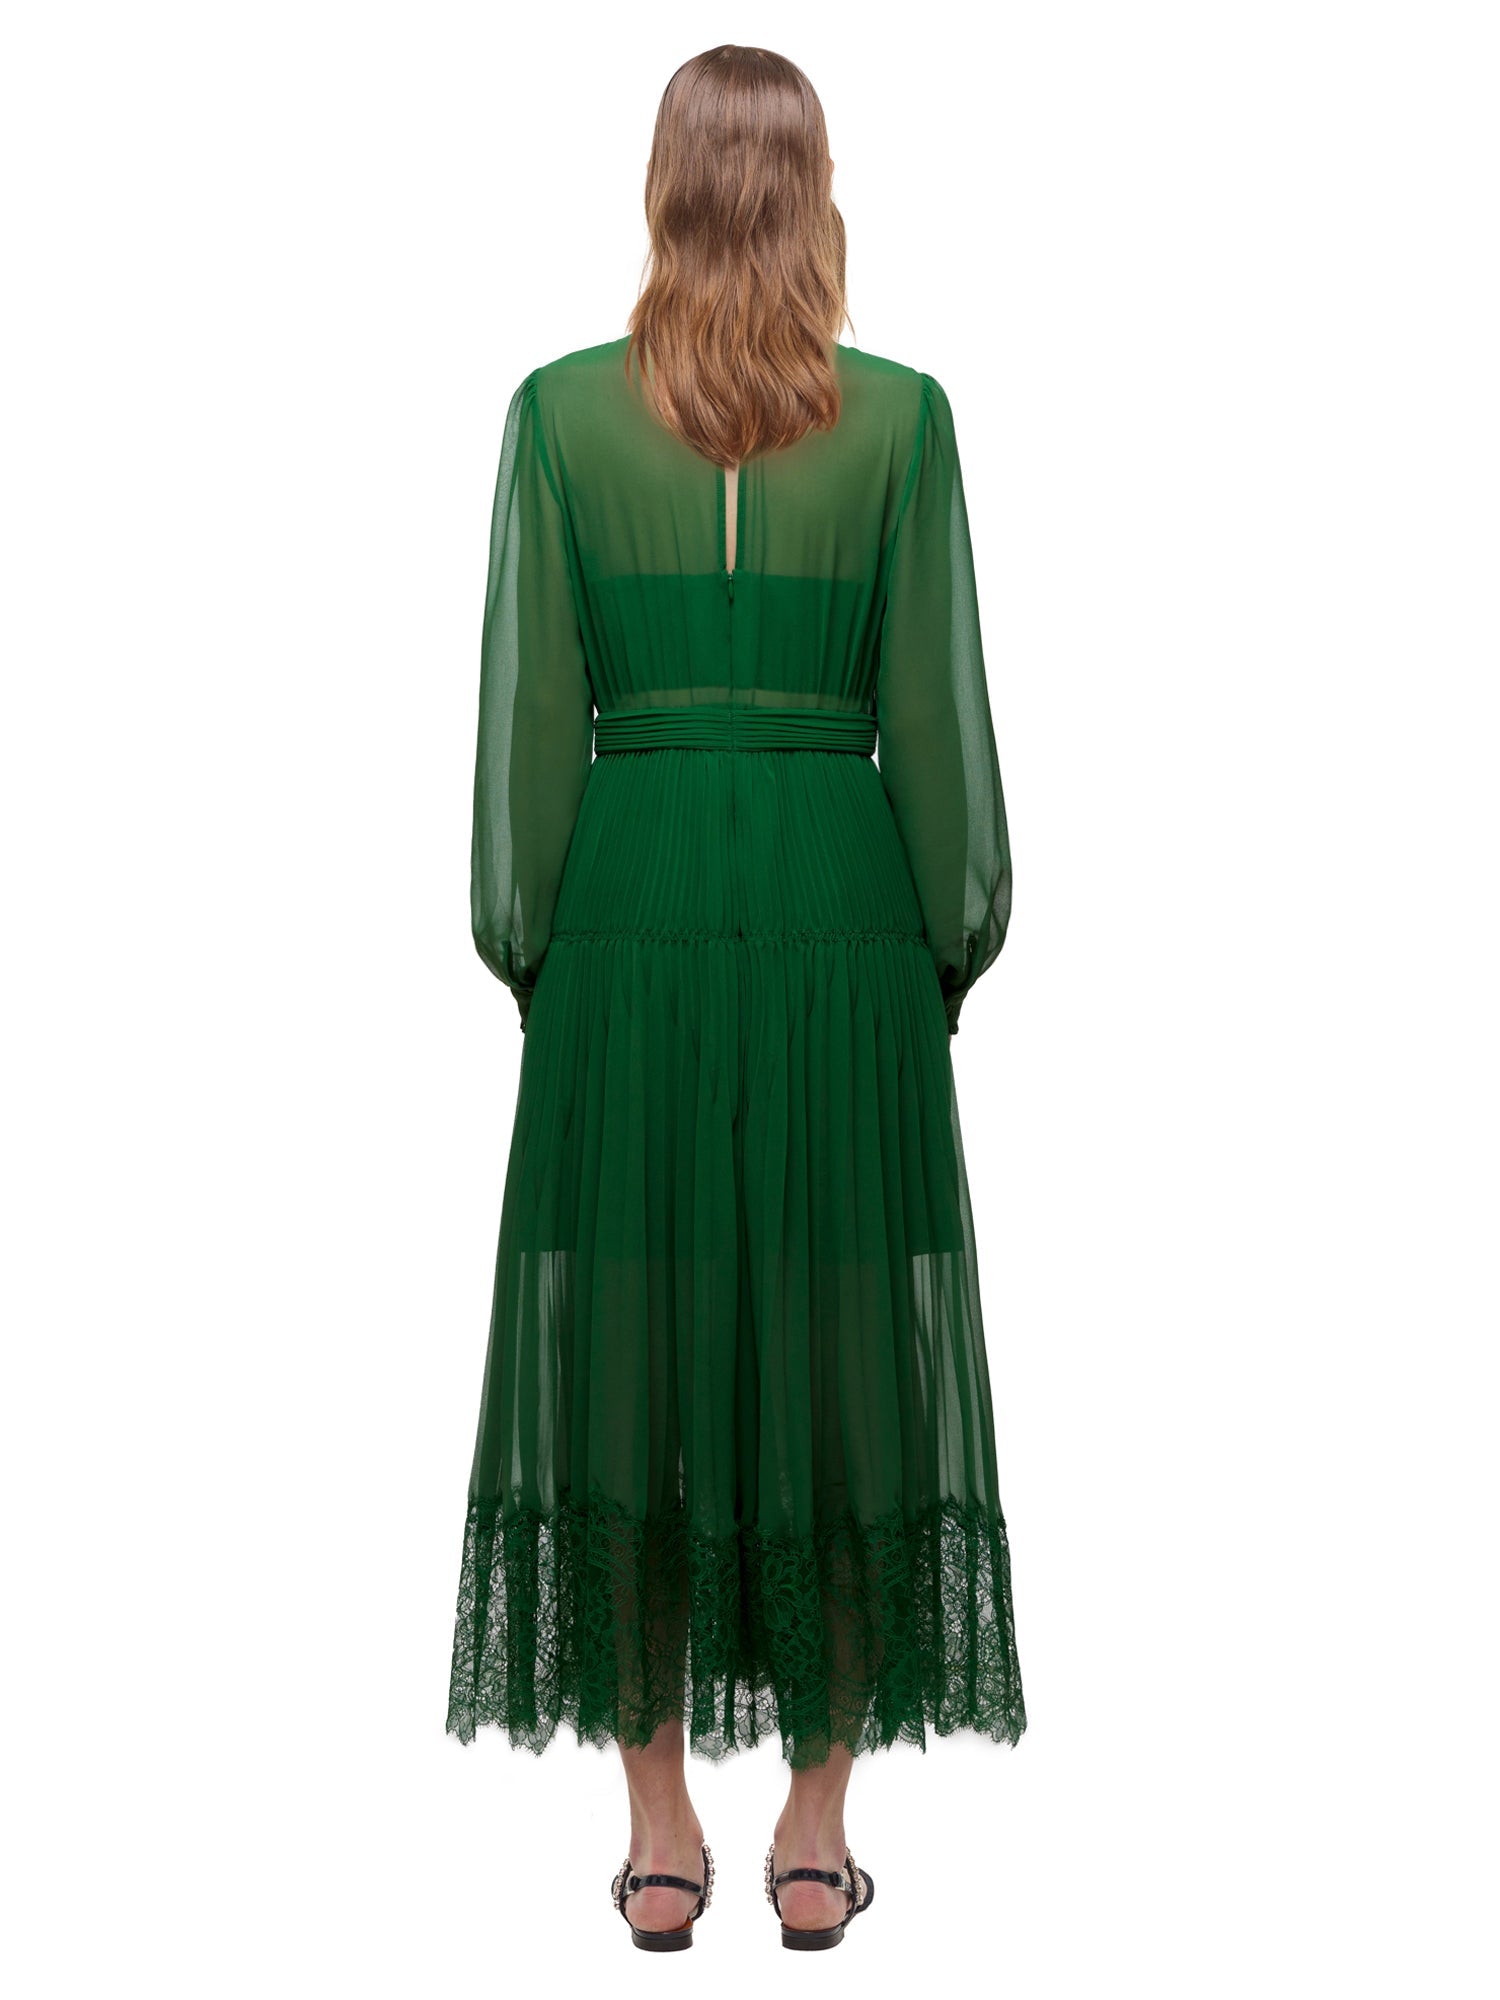 A woman wearing the Green Chiffon Trimmed Dress